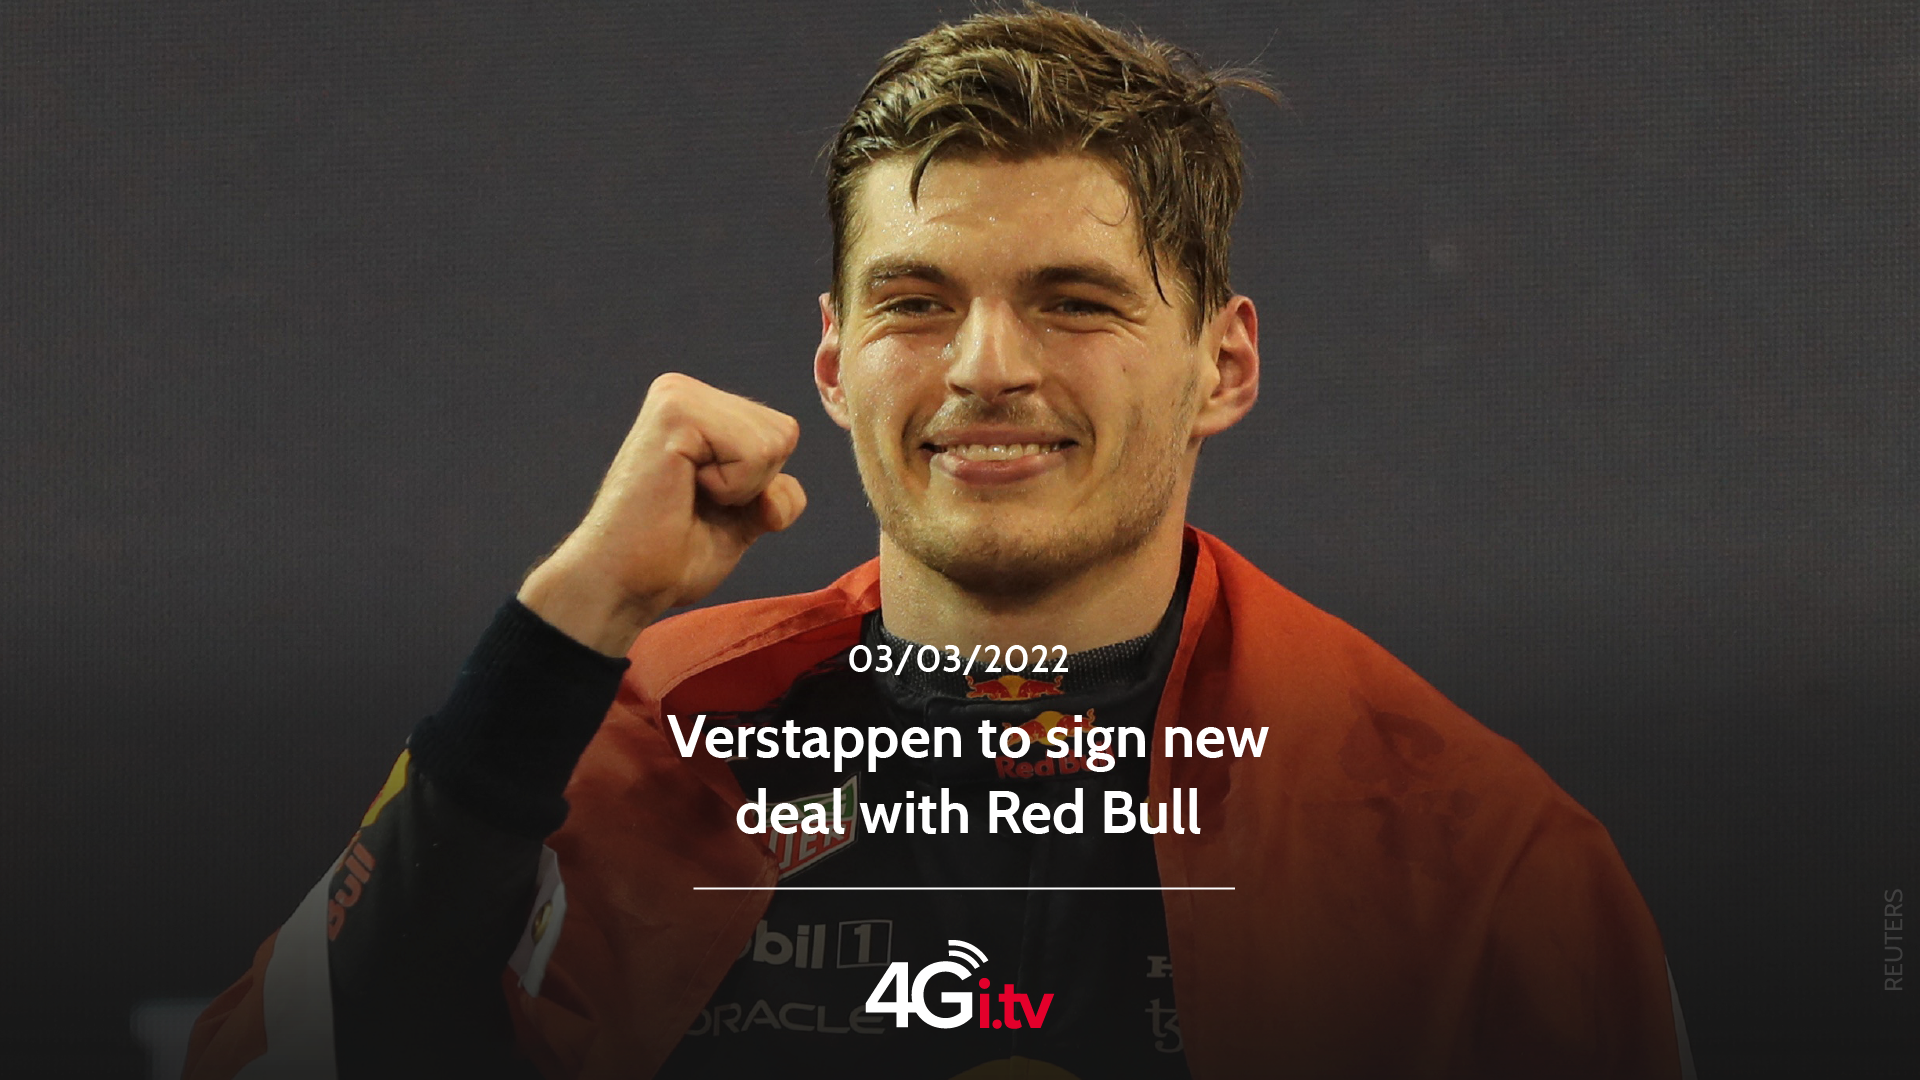 Подробнее о статье Verstappen to sign new deal with Red Bull